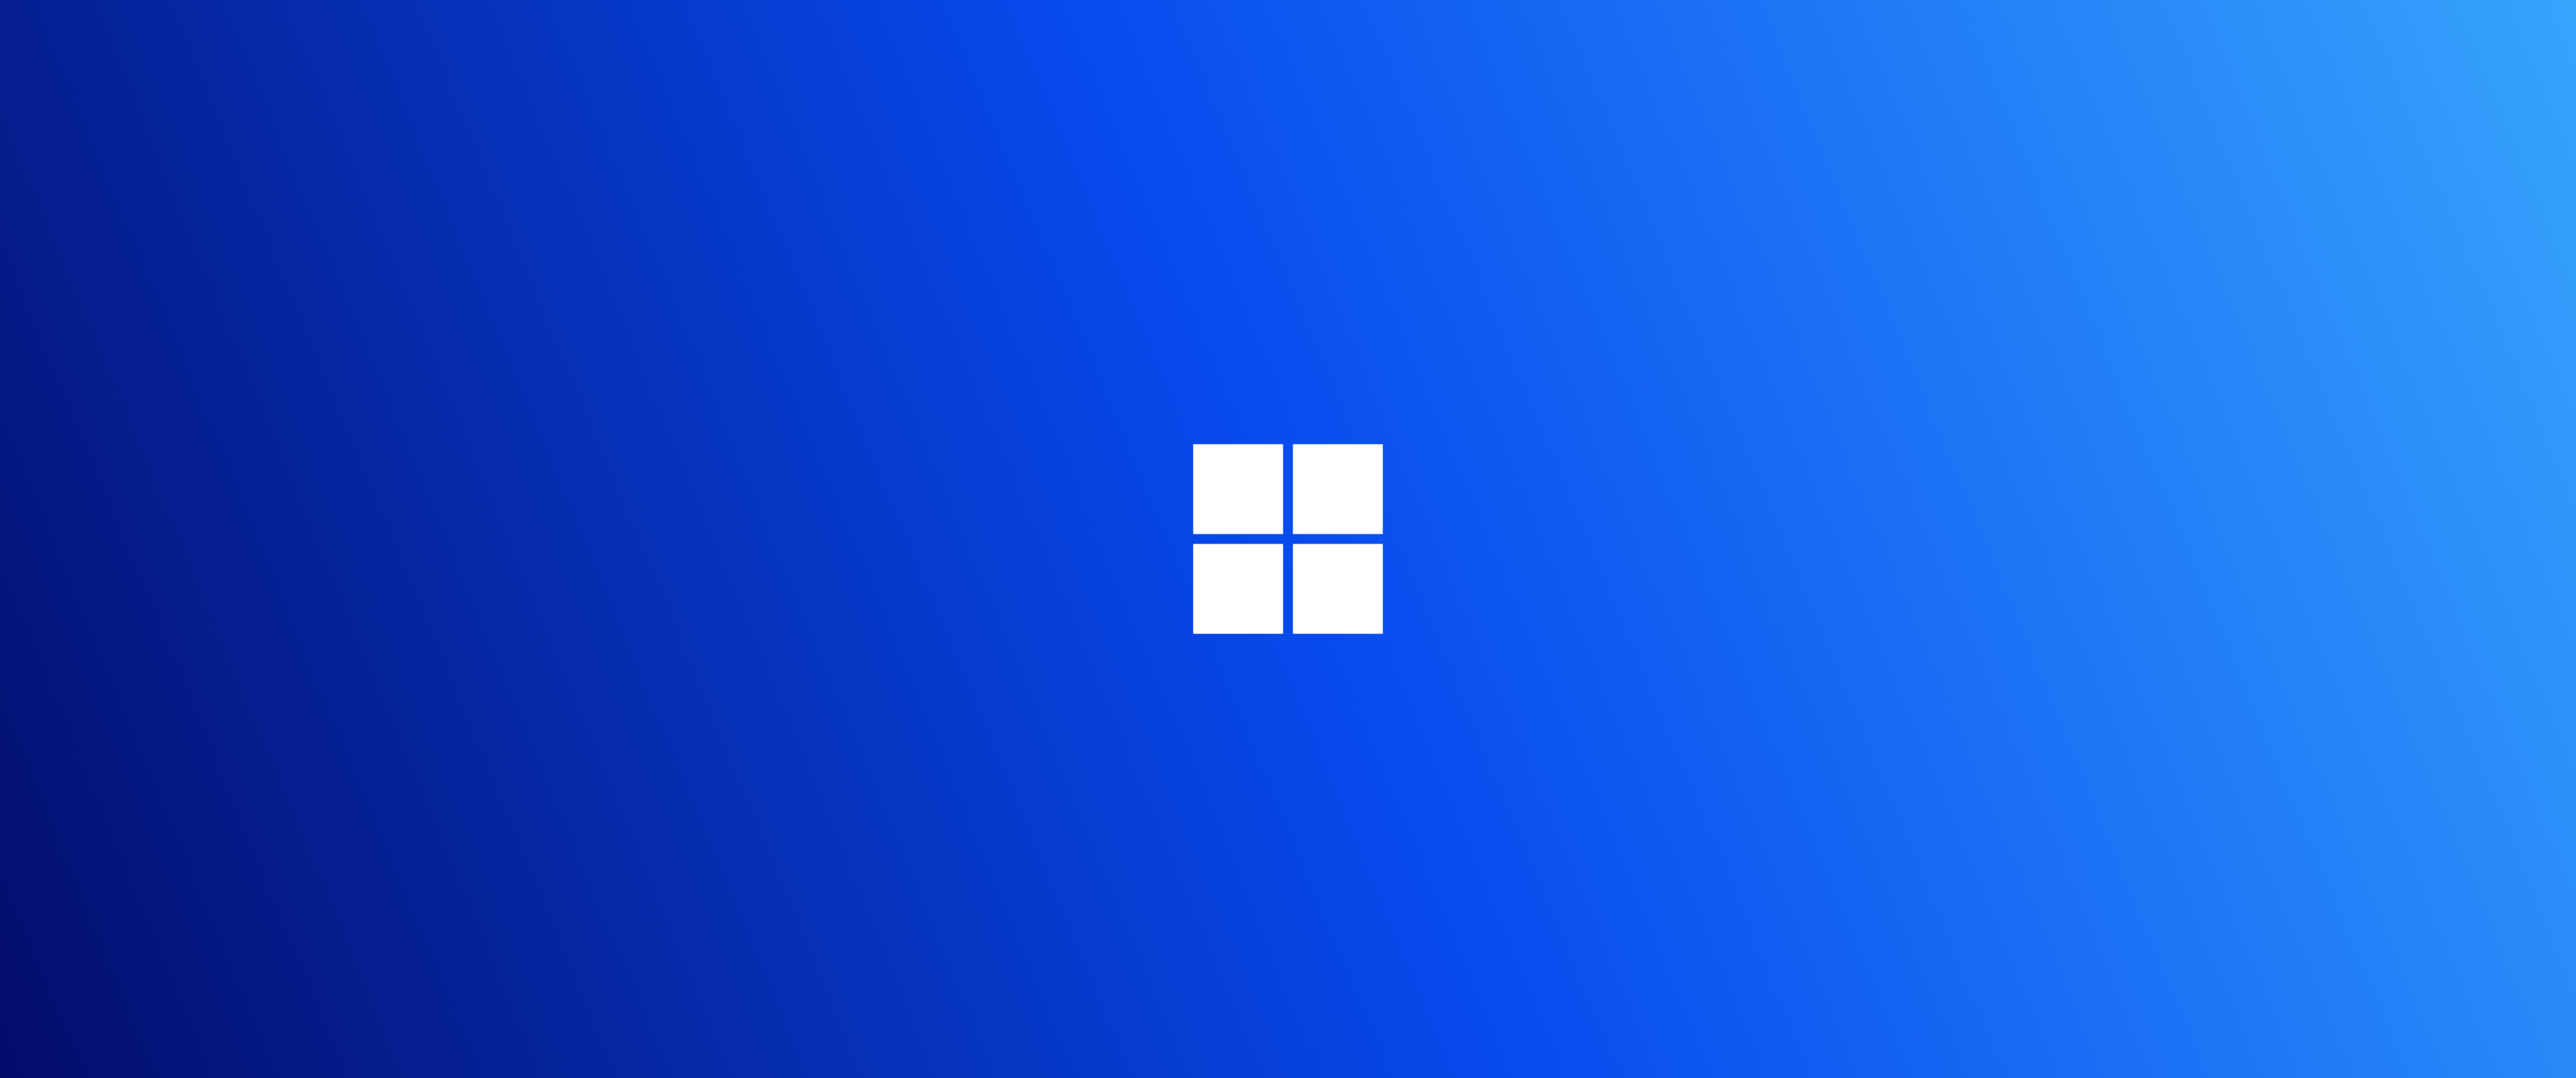 General 3440x1440 gradient minimalism operating system Windows 11 simple background logo Windows 10